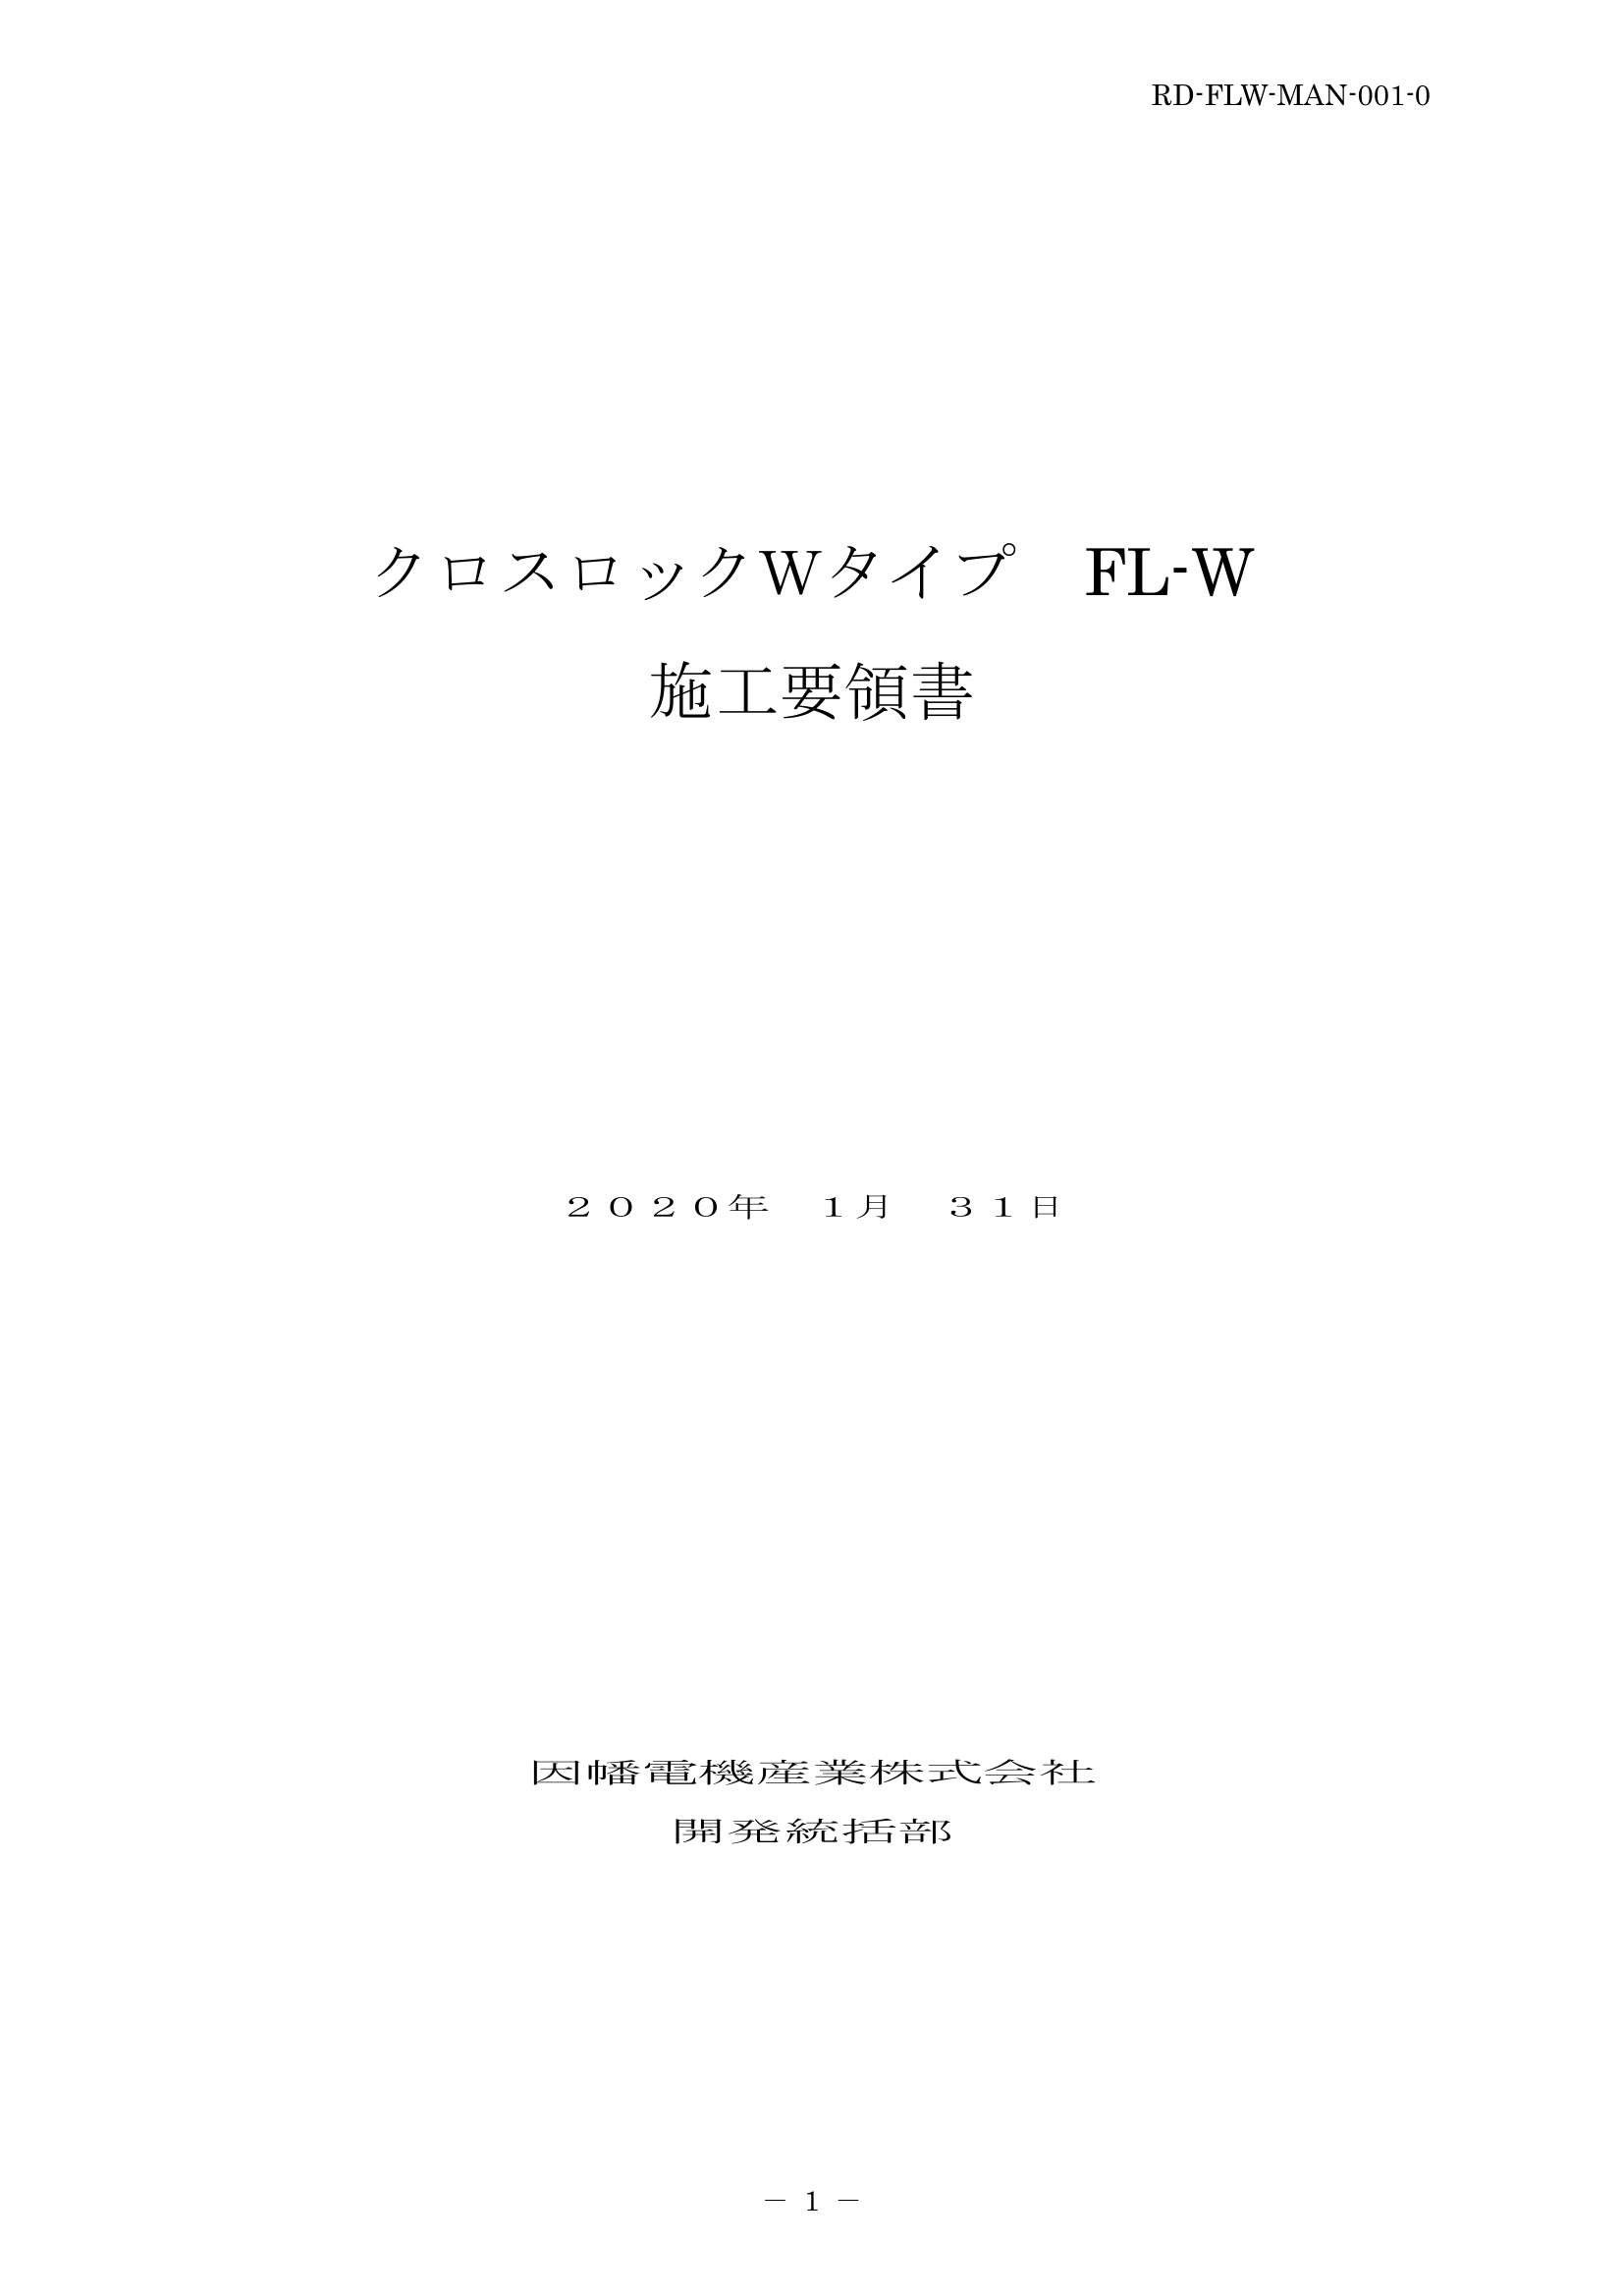 FL-W_施工要領手順書_20200131.pdf